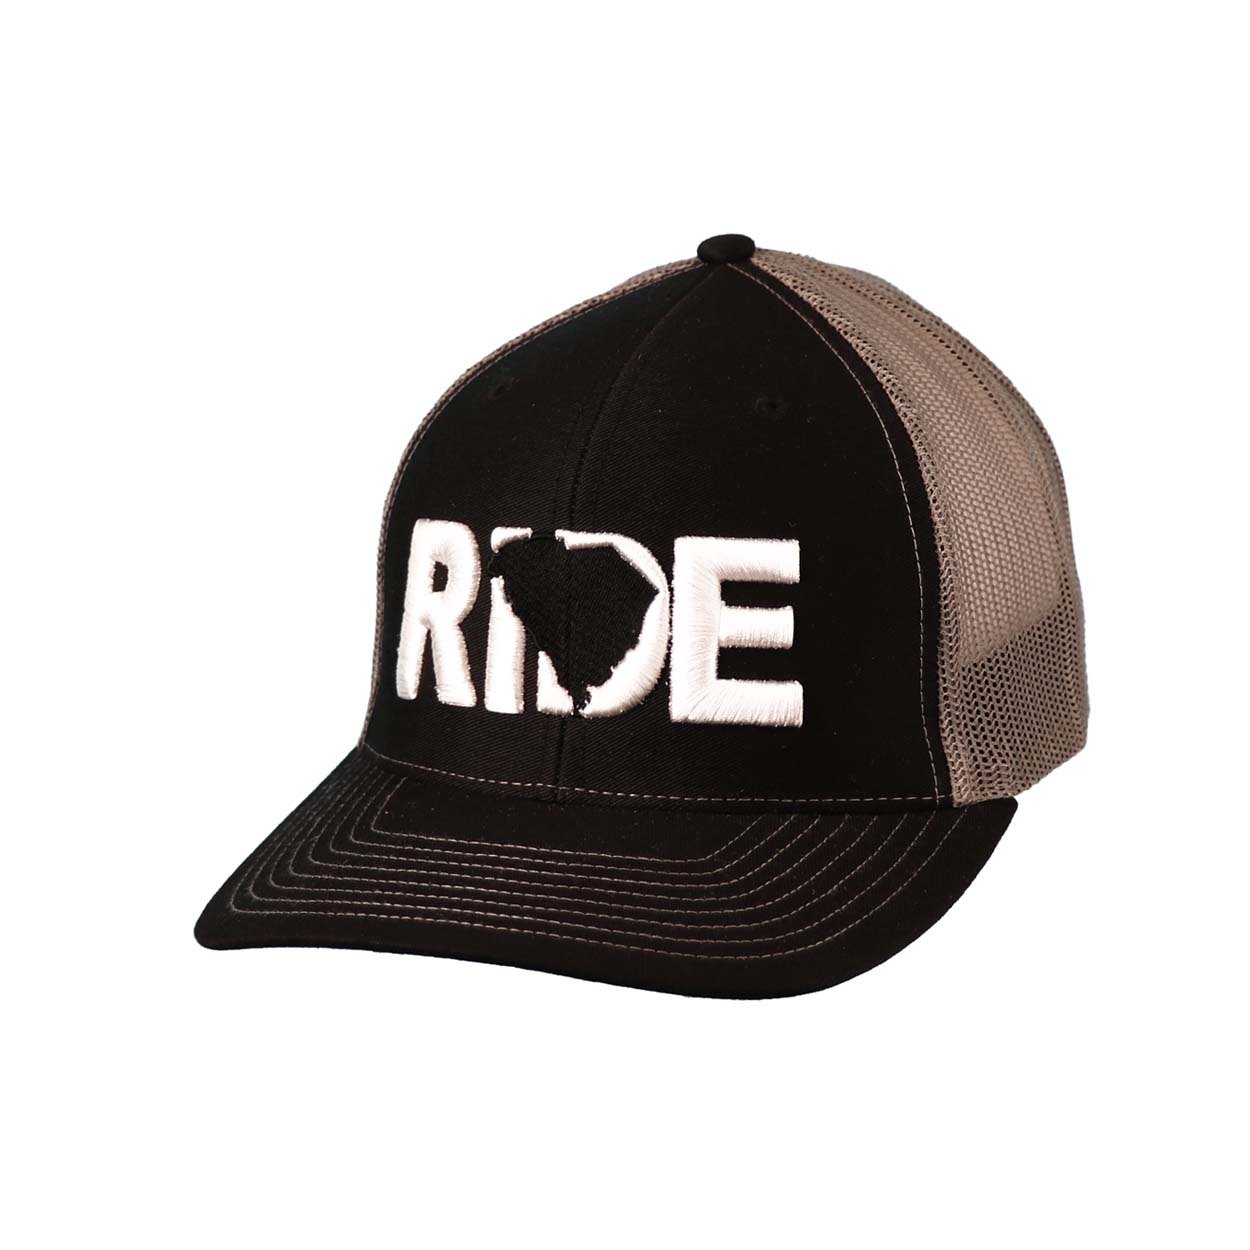 Ride South Carolina Classic Embroidered Snapback Trucker Hat Black/Gray